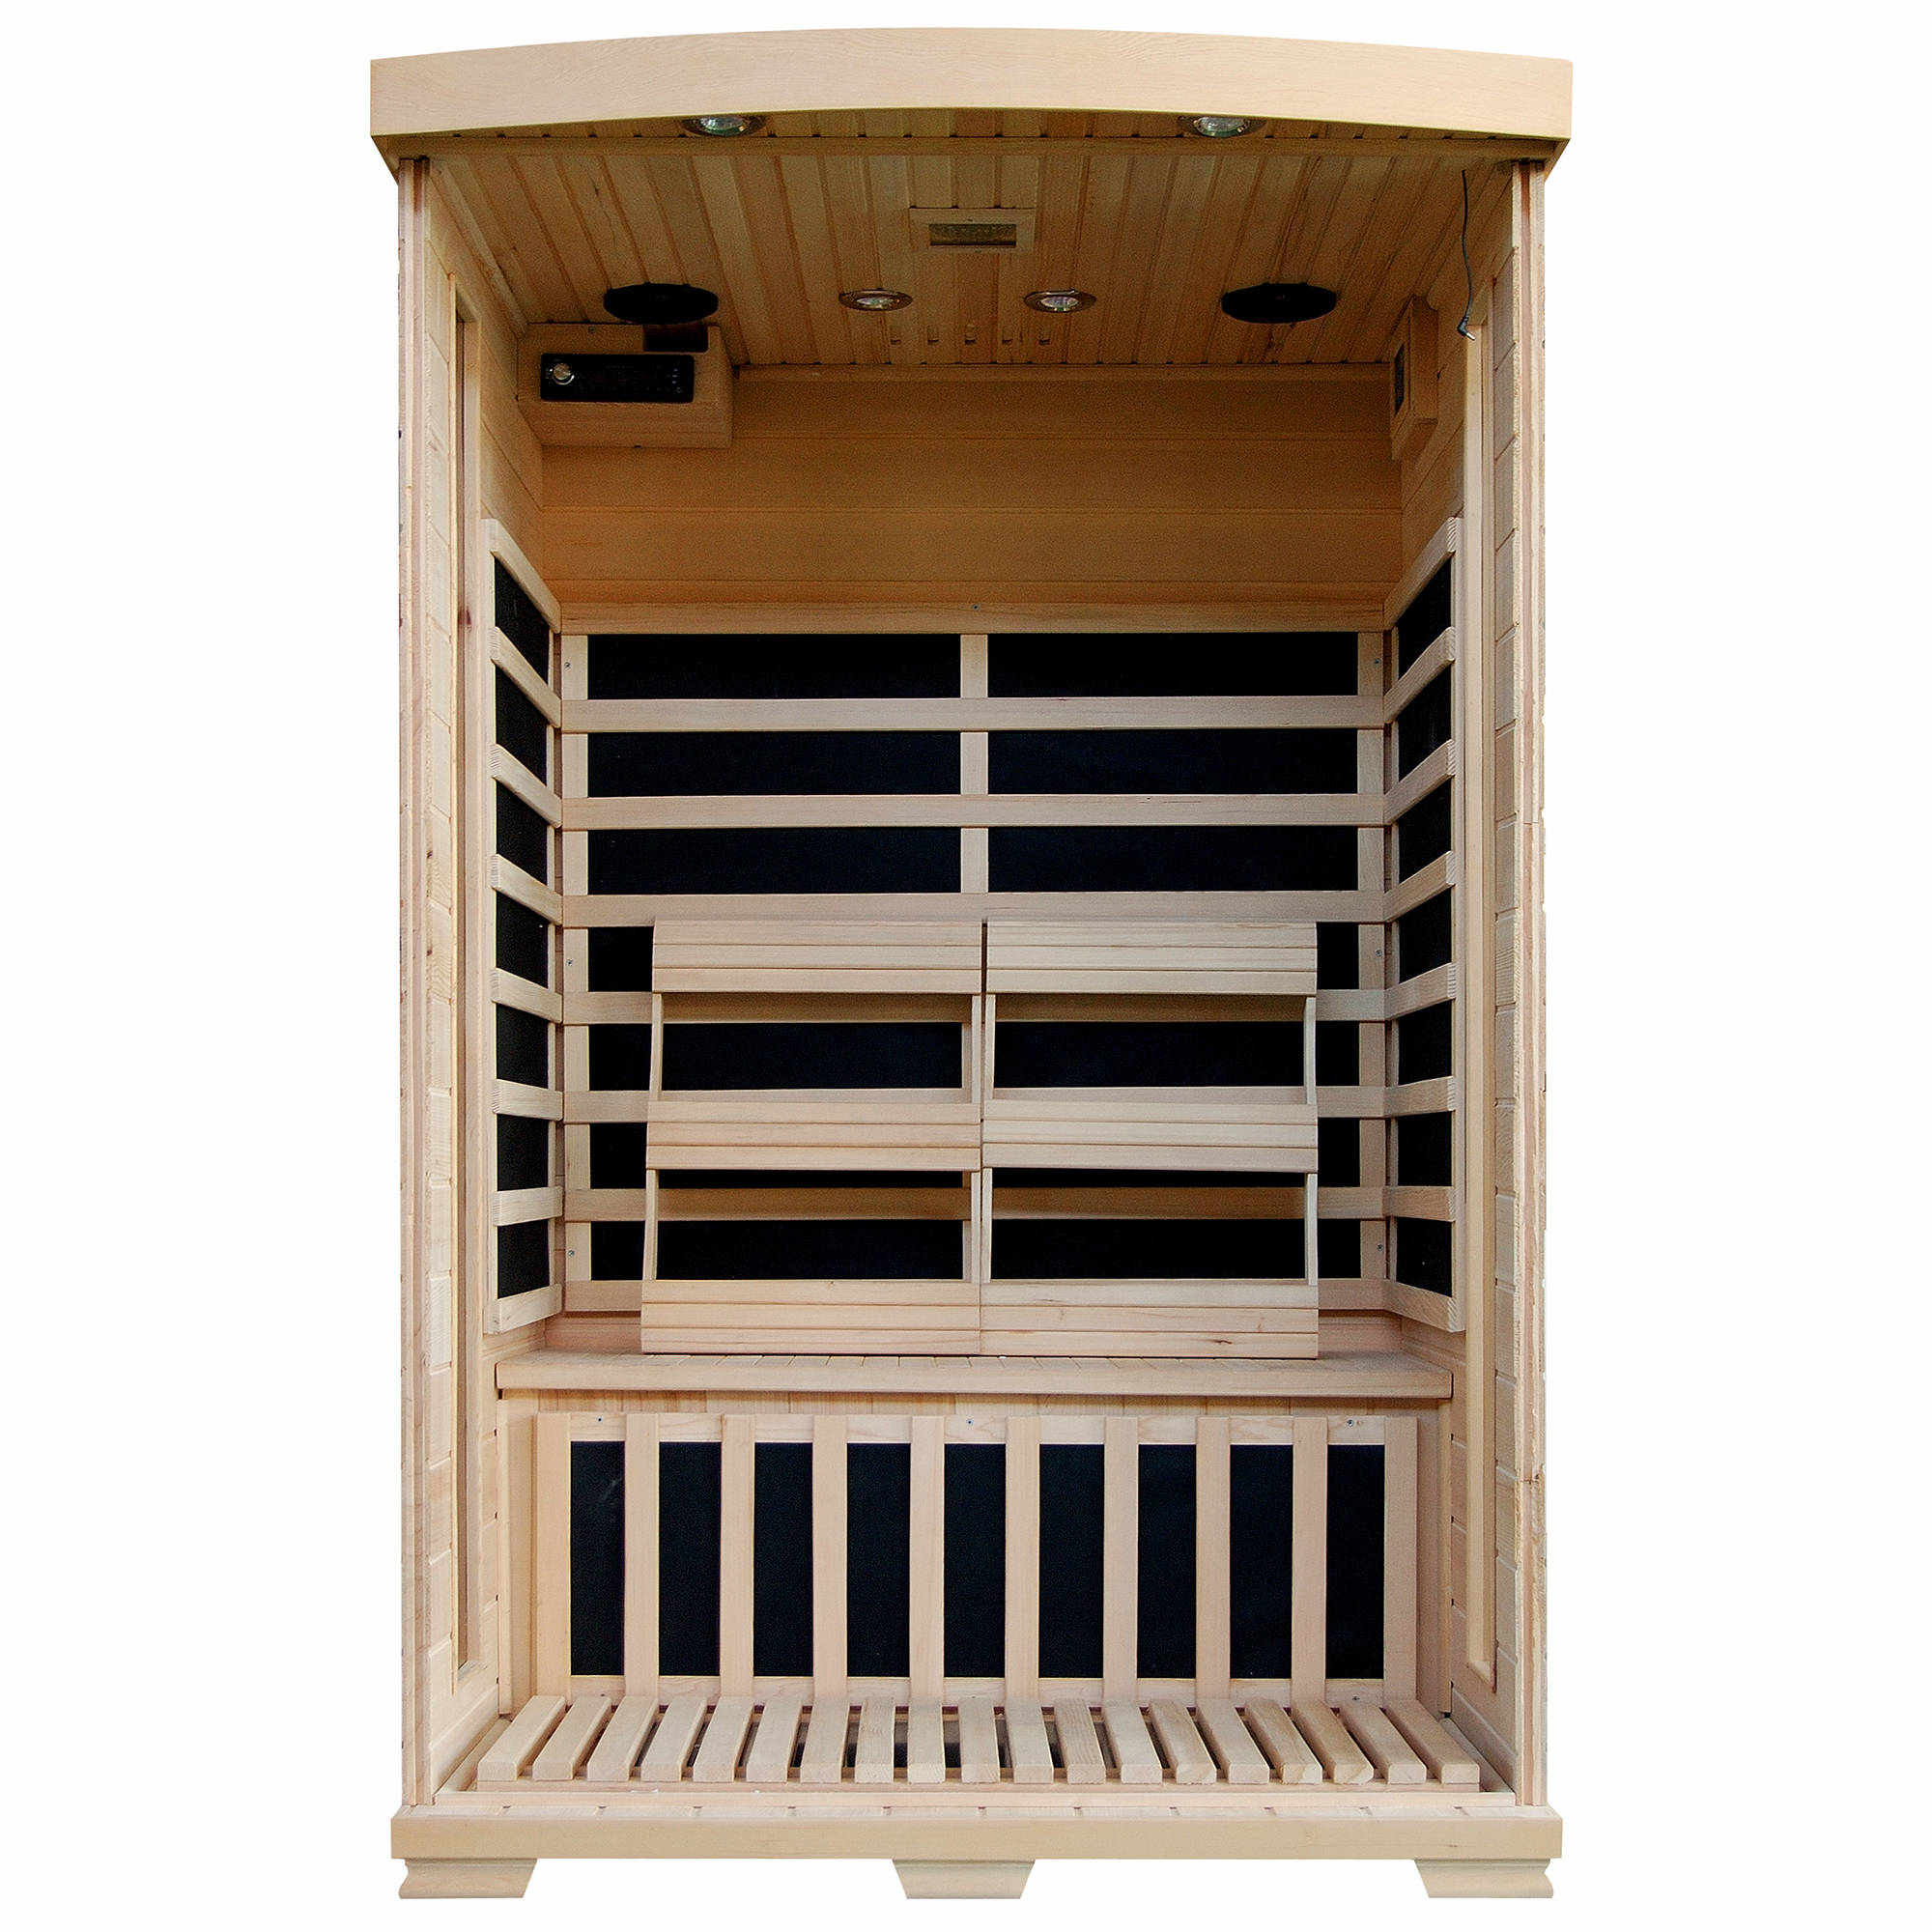 Infrared 2 Person Hemlock Home Sauna With Carbon Heaters By Heatwave Saunas - Coronado - SA2409